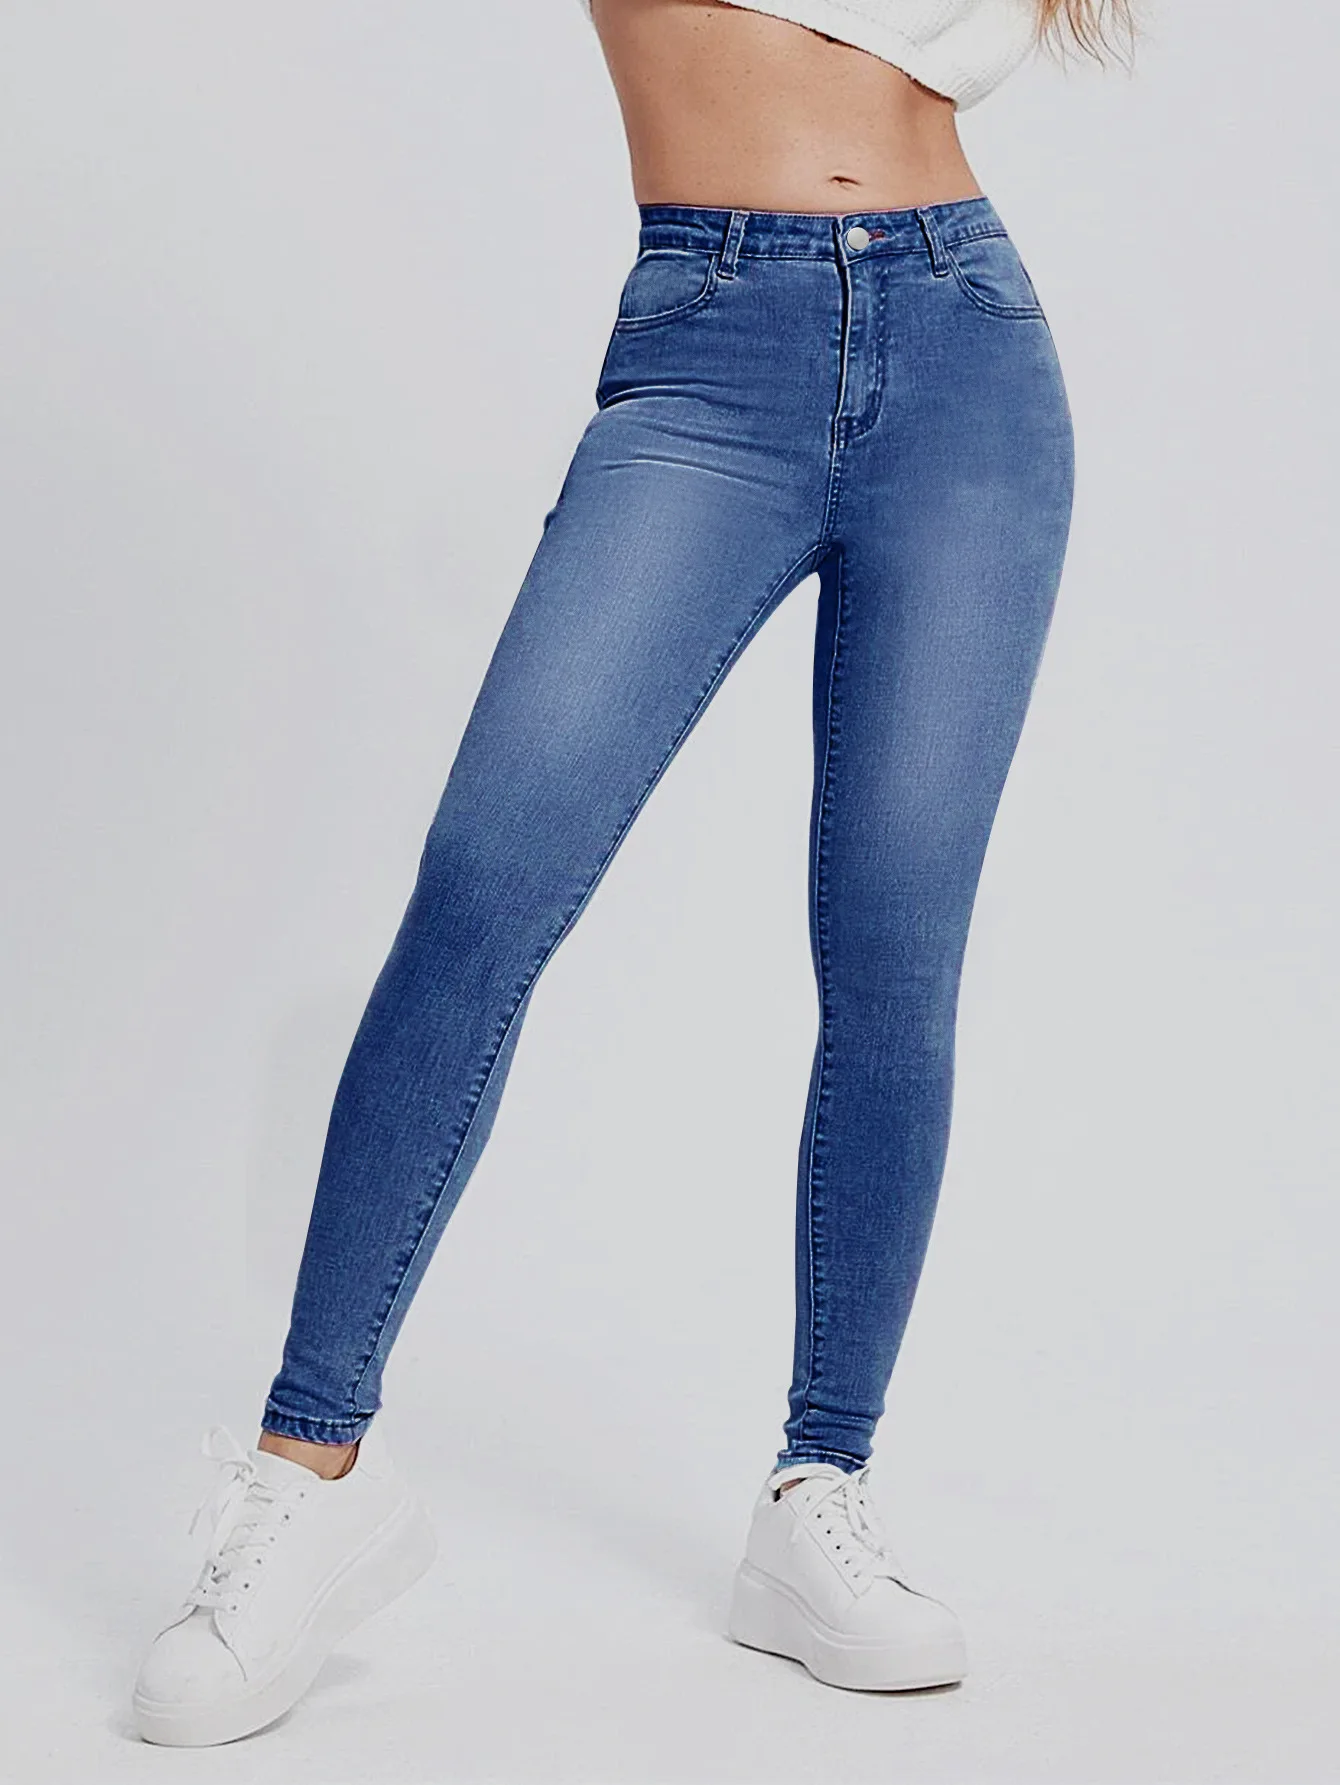 Women's Denim Trousers Summer Fashion Casual Street Style Temperament Commuter Jeans Skinny High Waist Slim Denim Pencil Pants